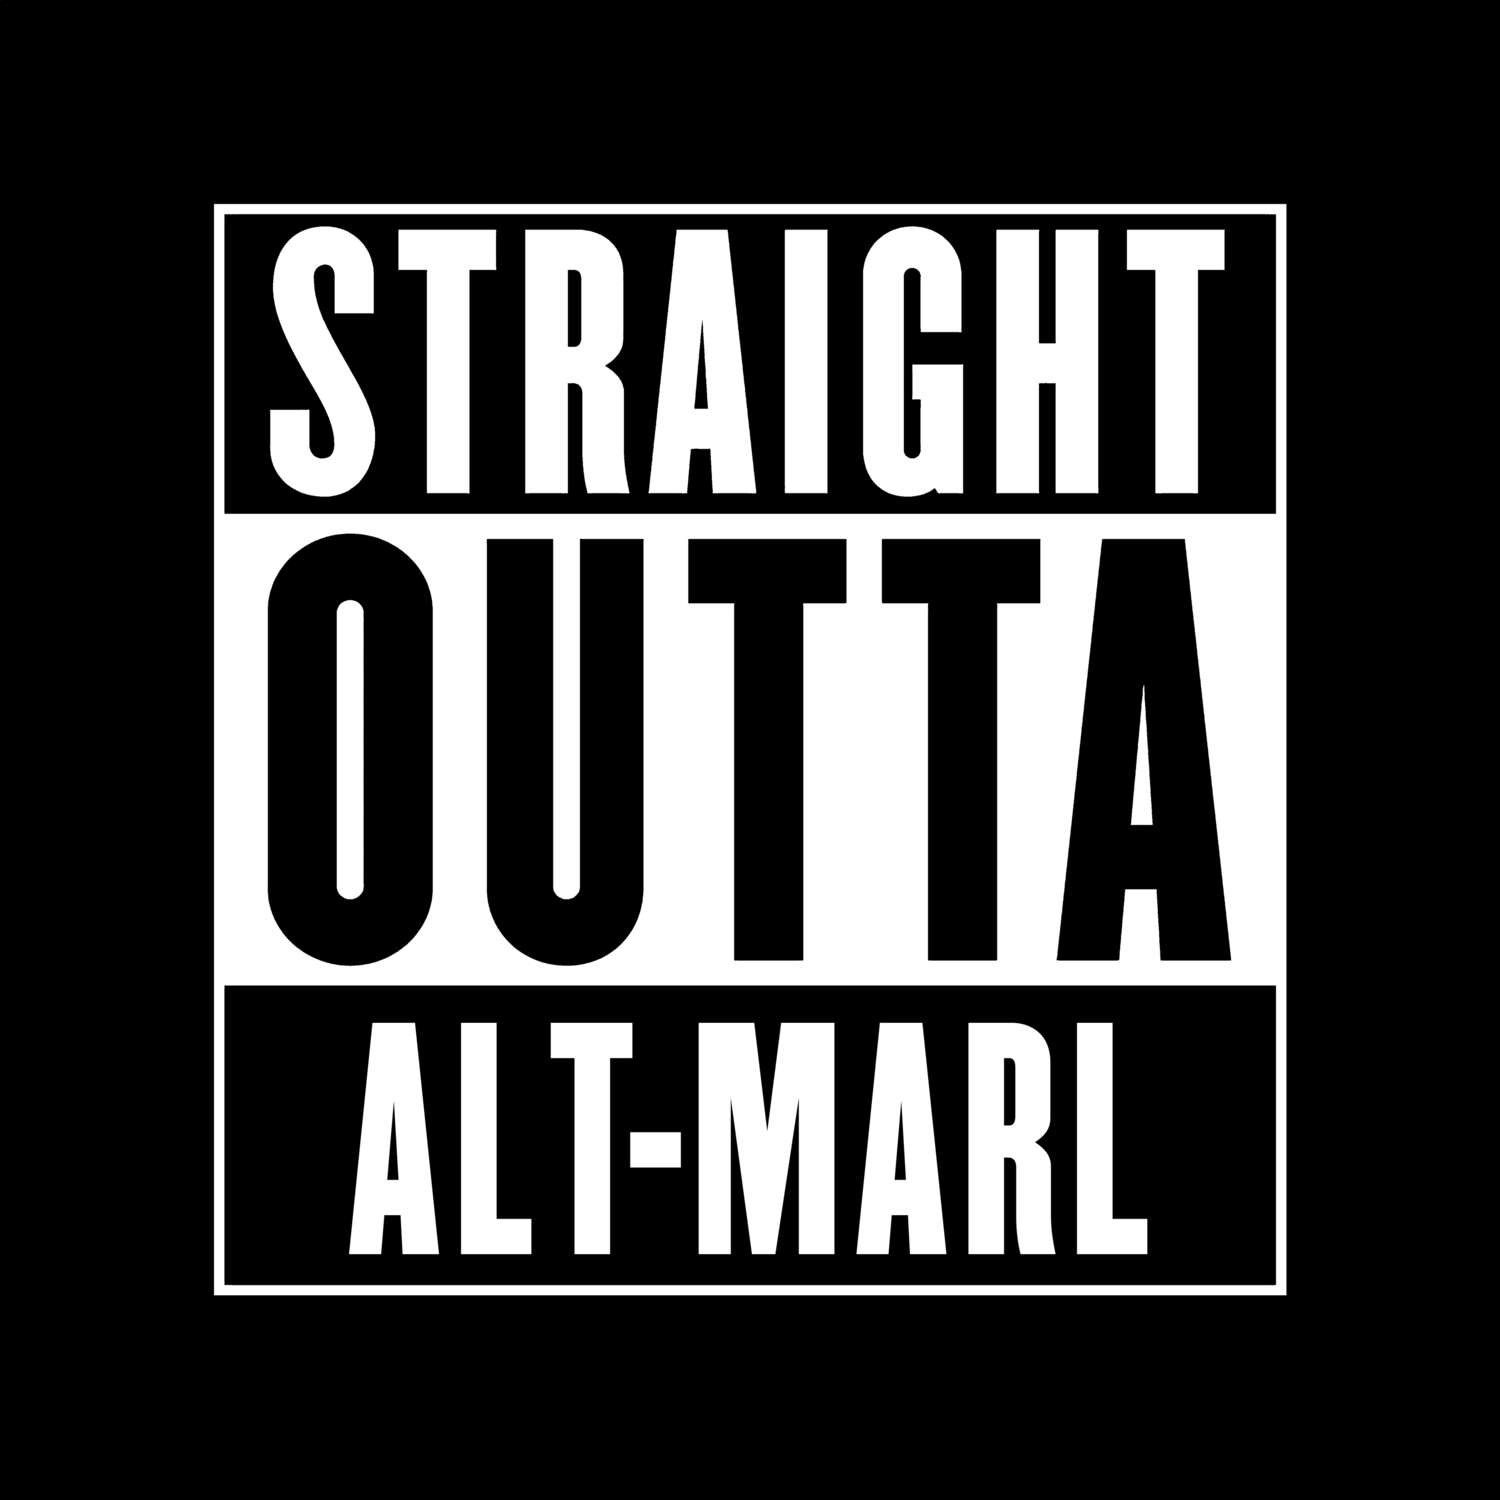 Alt-Marl T-Shirt »Straight Outta«